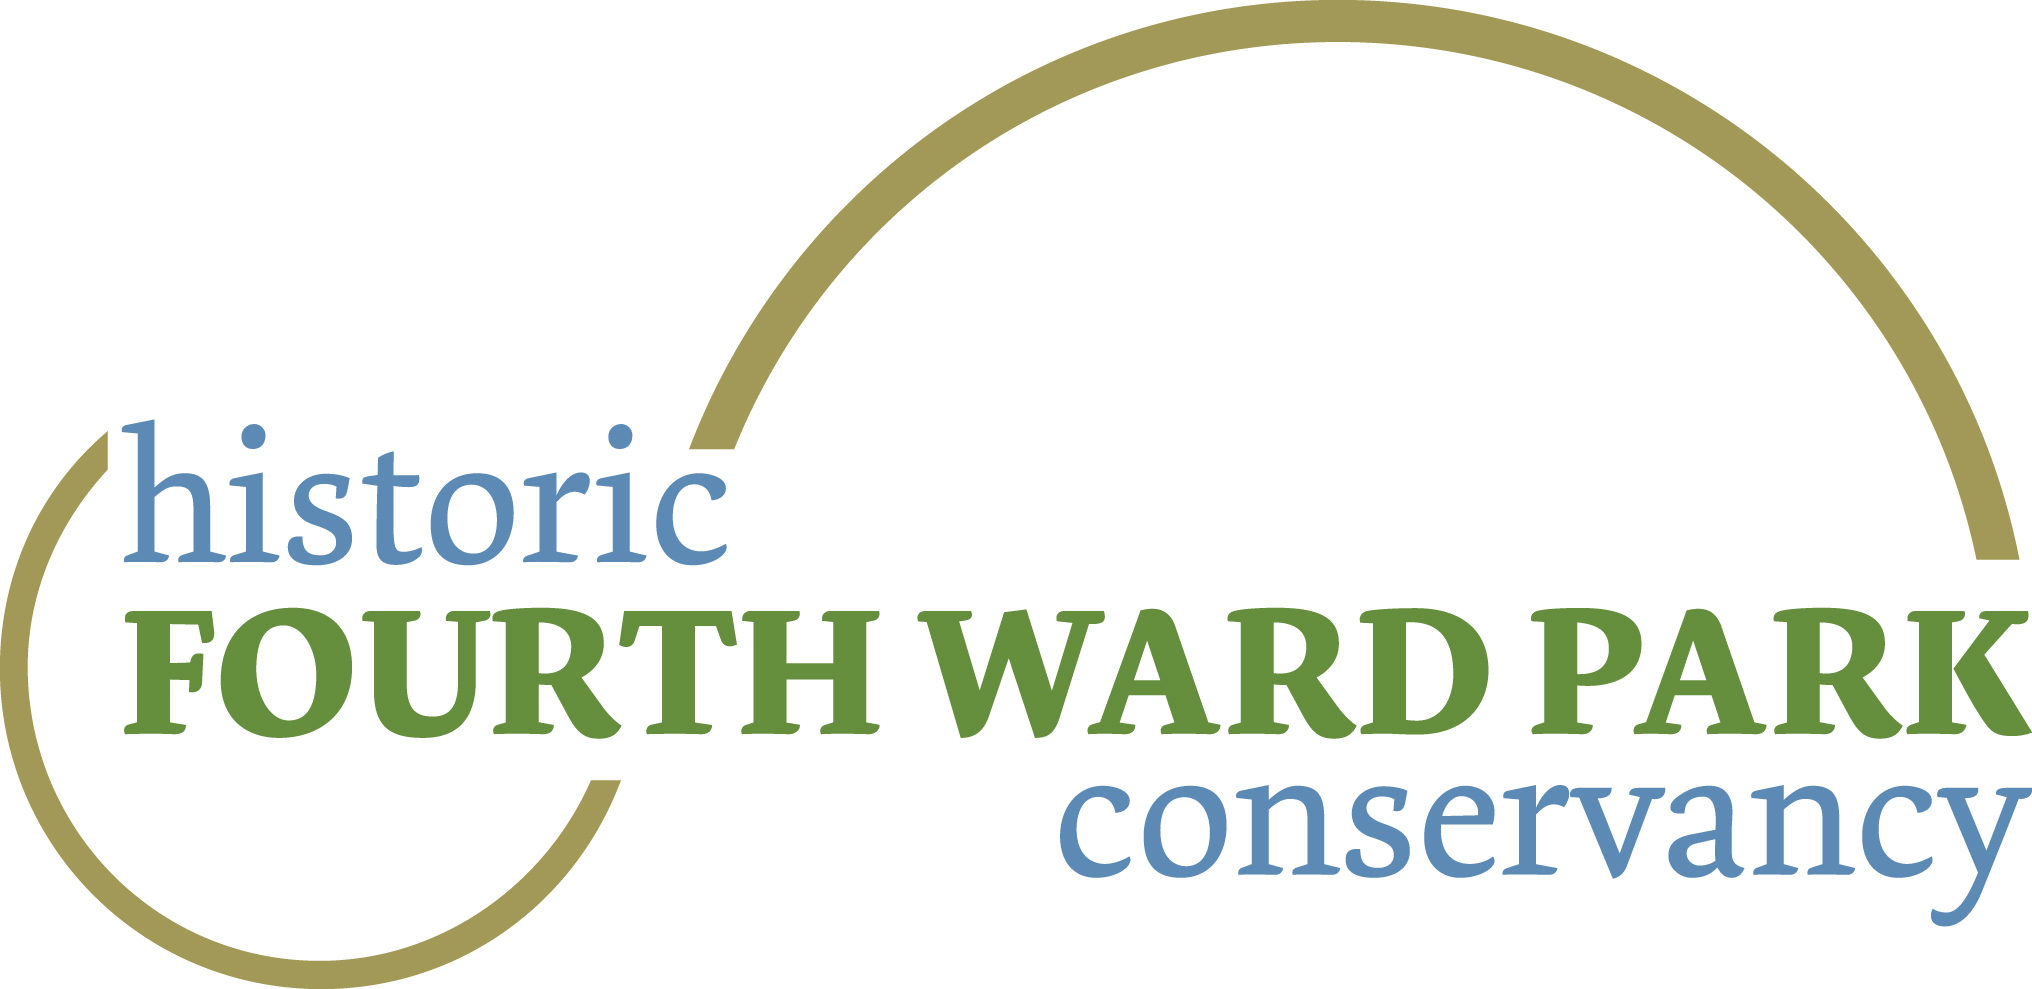 Historic Fourth Ward Park Conservancy